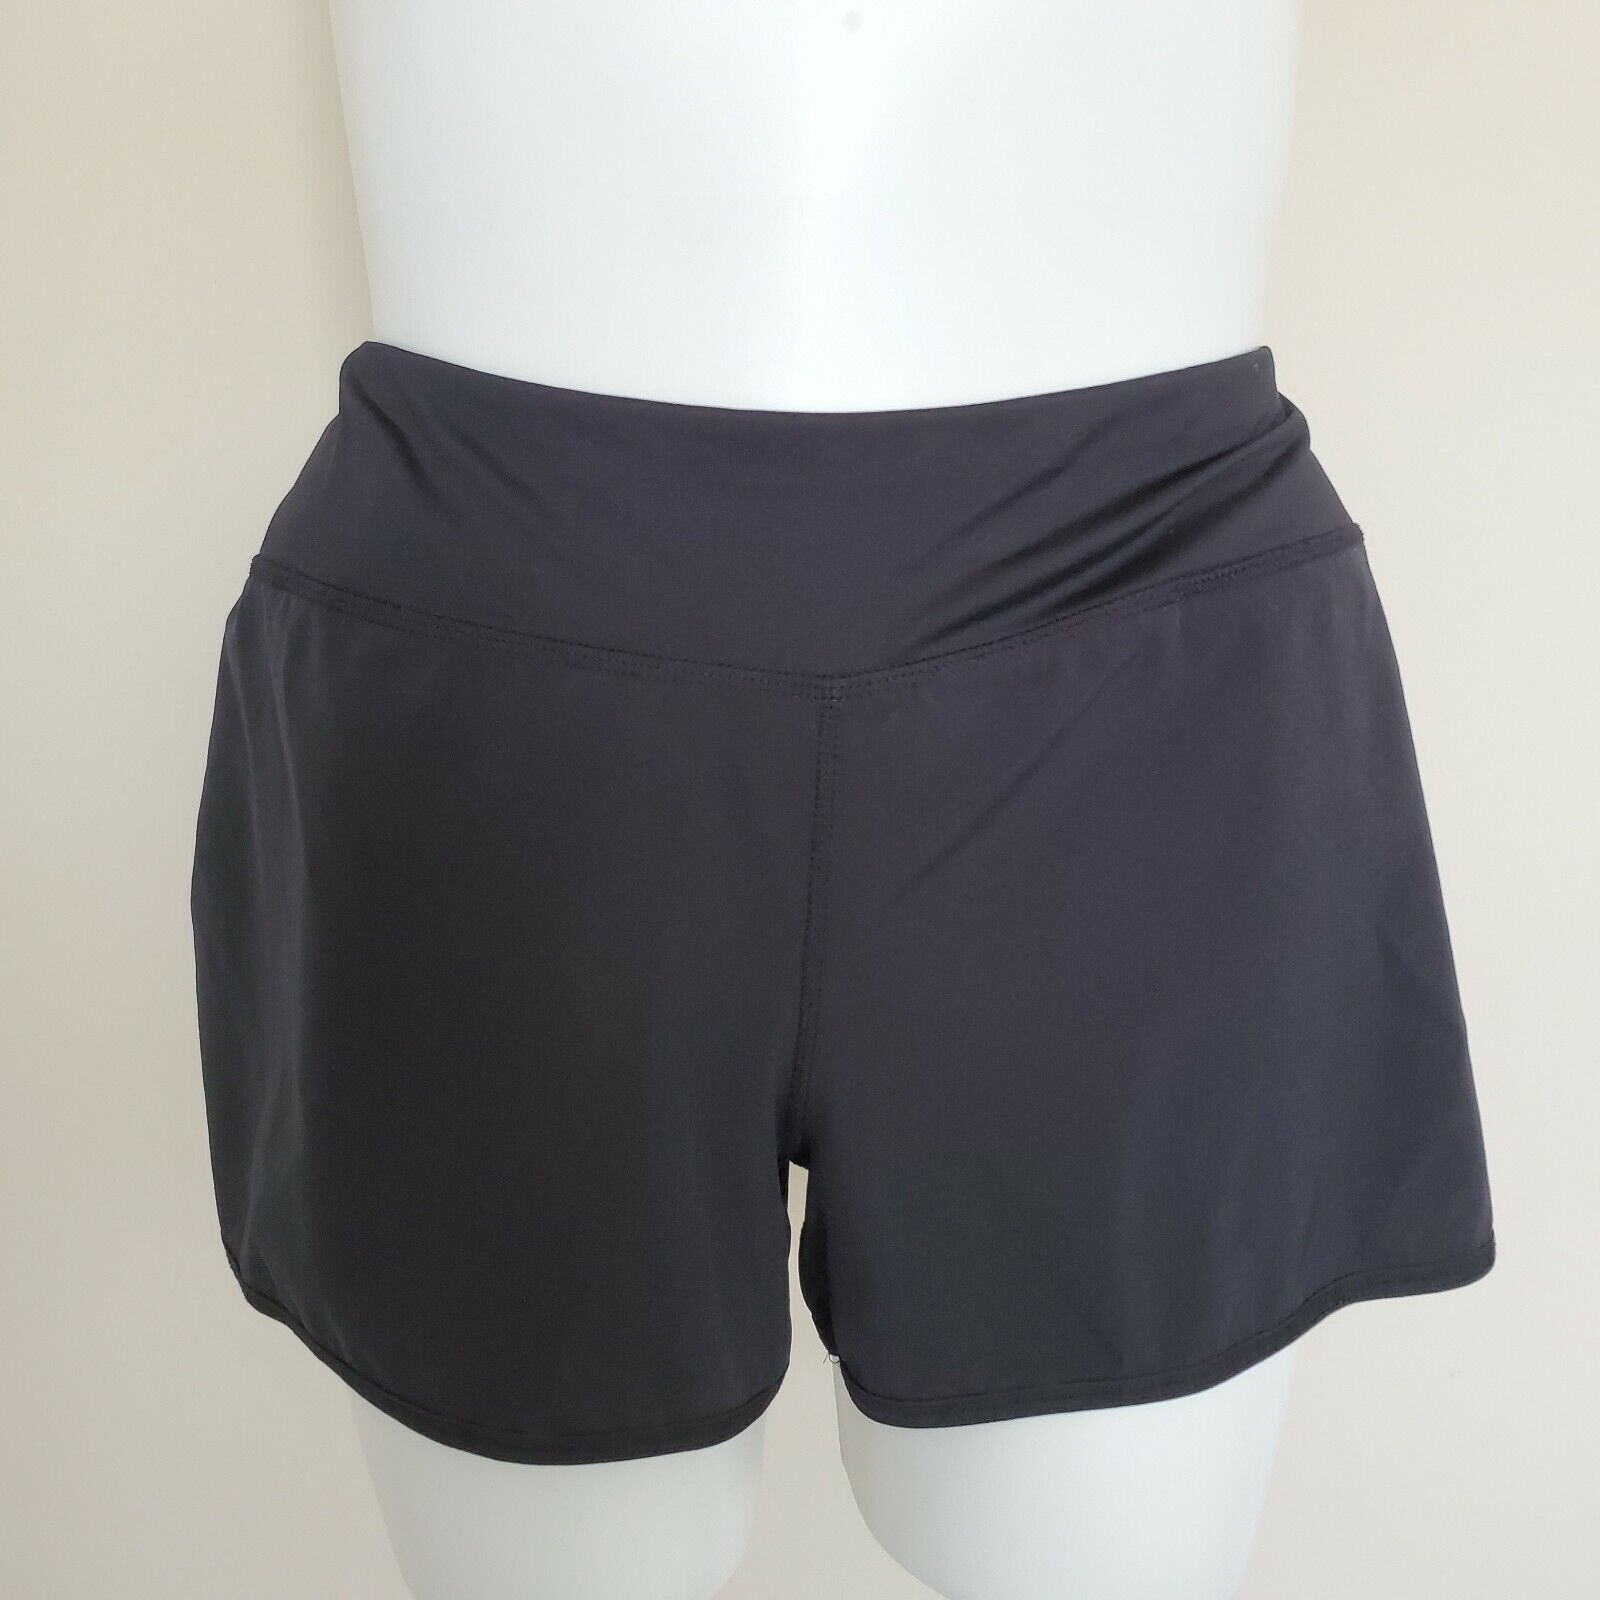 Idealogy Women's Lined Running Shorts Size Xxl Black Activewear Jogging Sport 2x